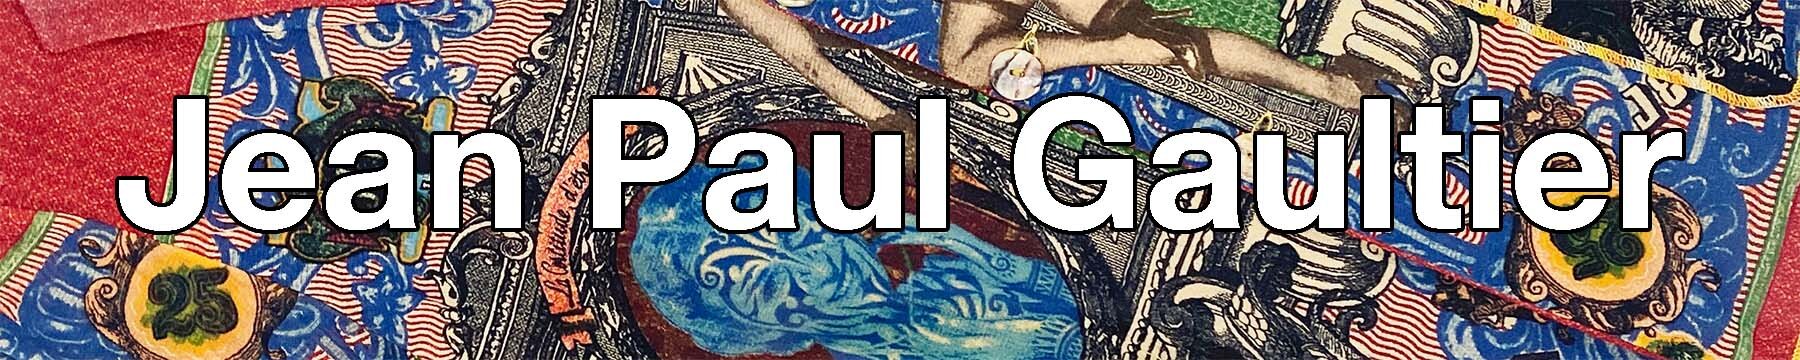 Jean Paul Gaultier button.jpg